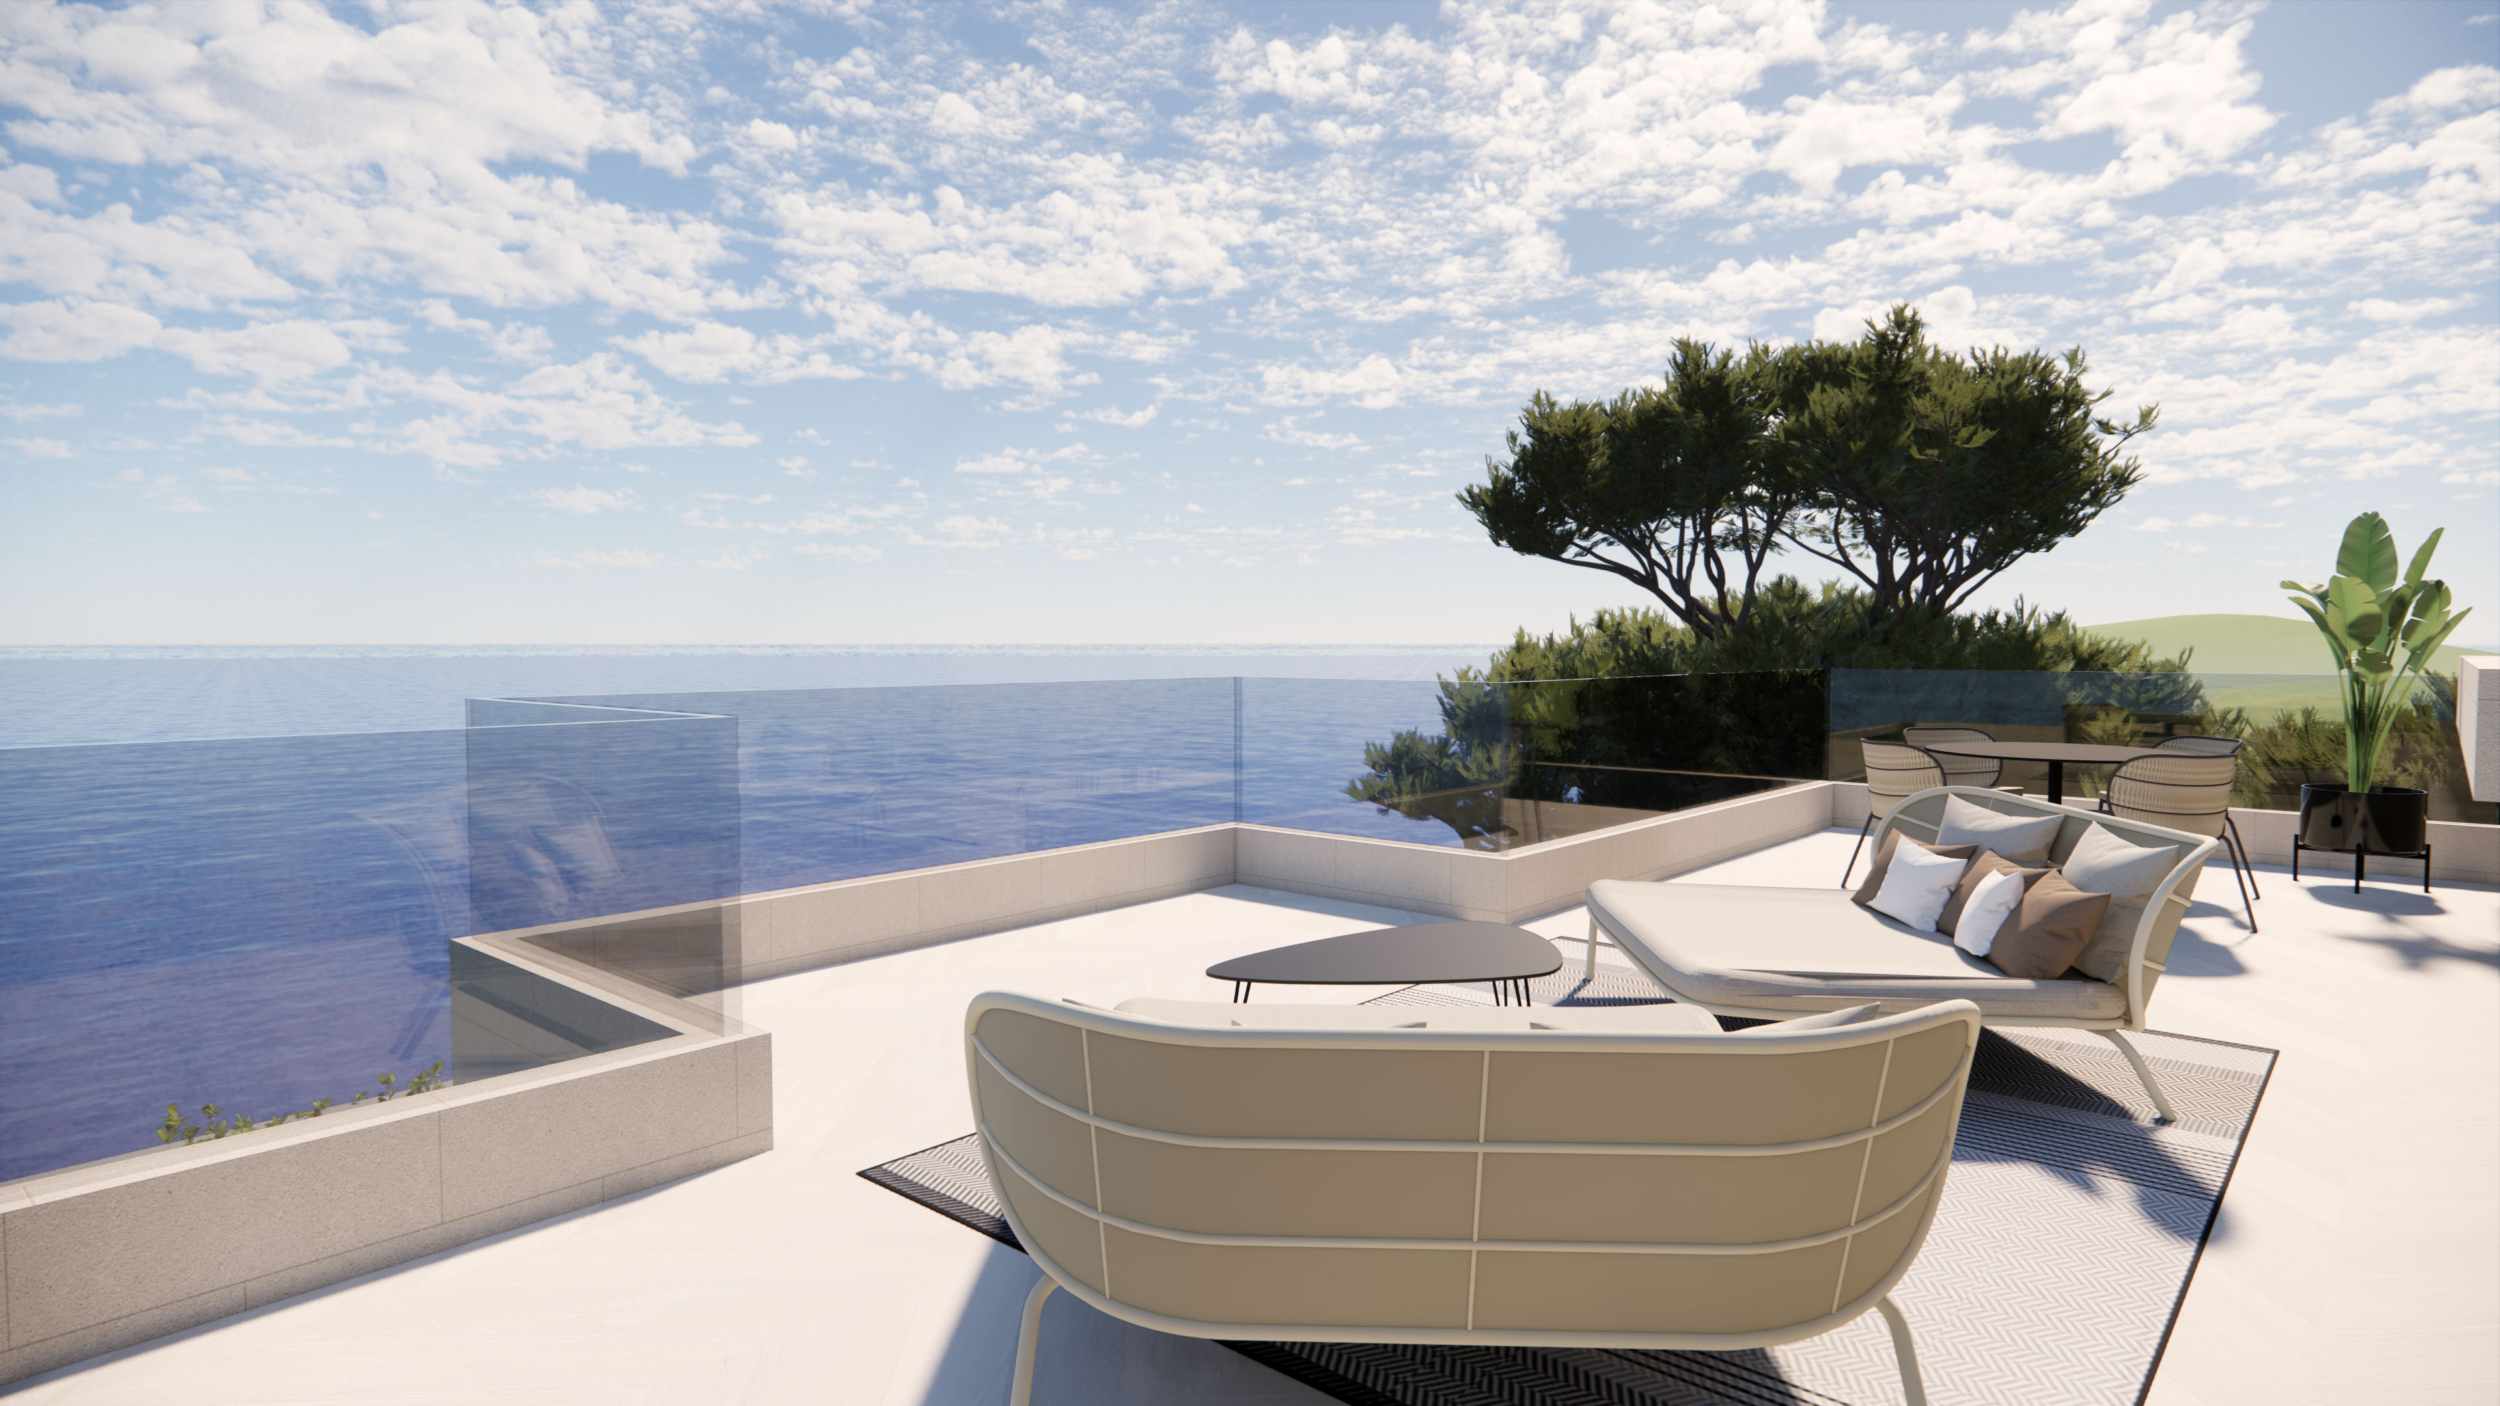 Villa Sapphire, Luxury Balcony View CGI, Linear CGI Studio